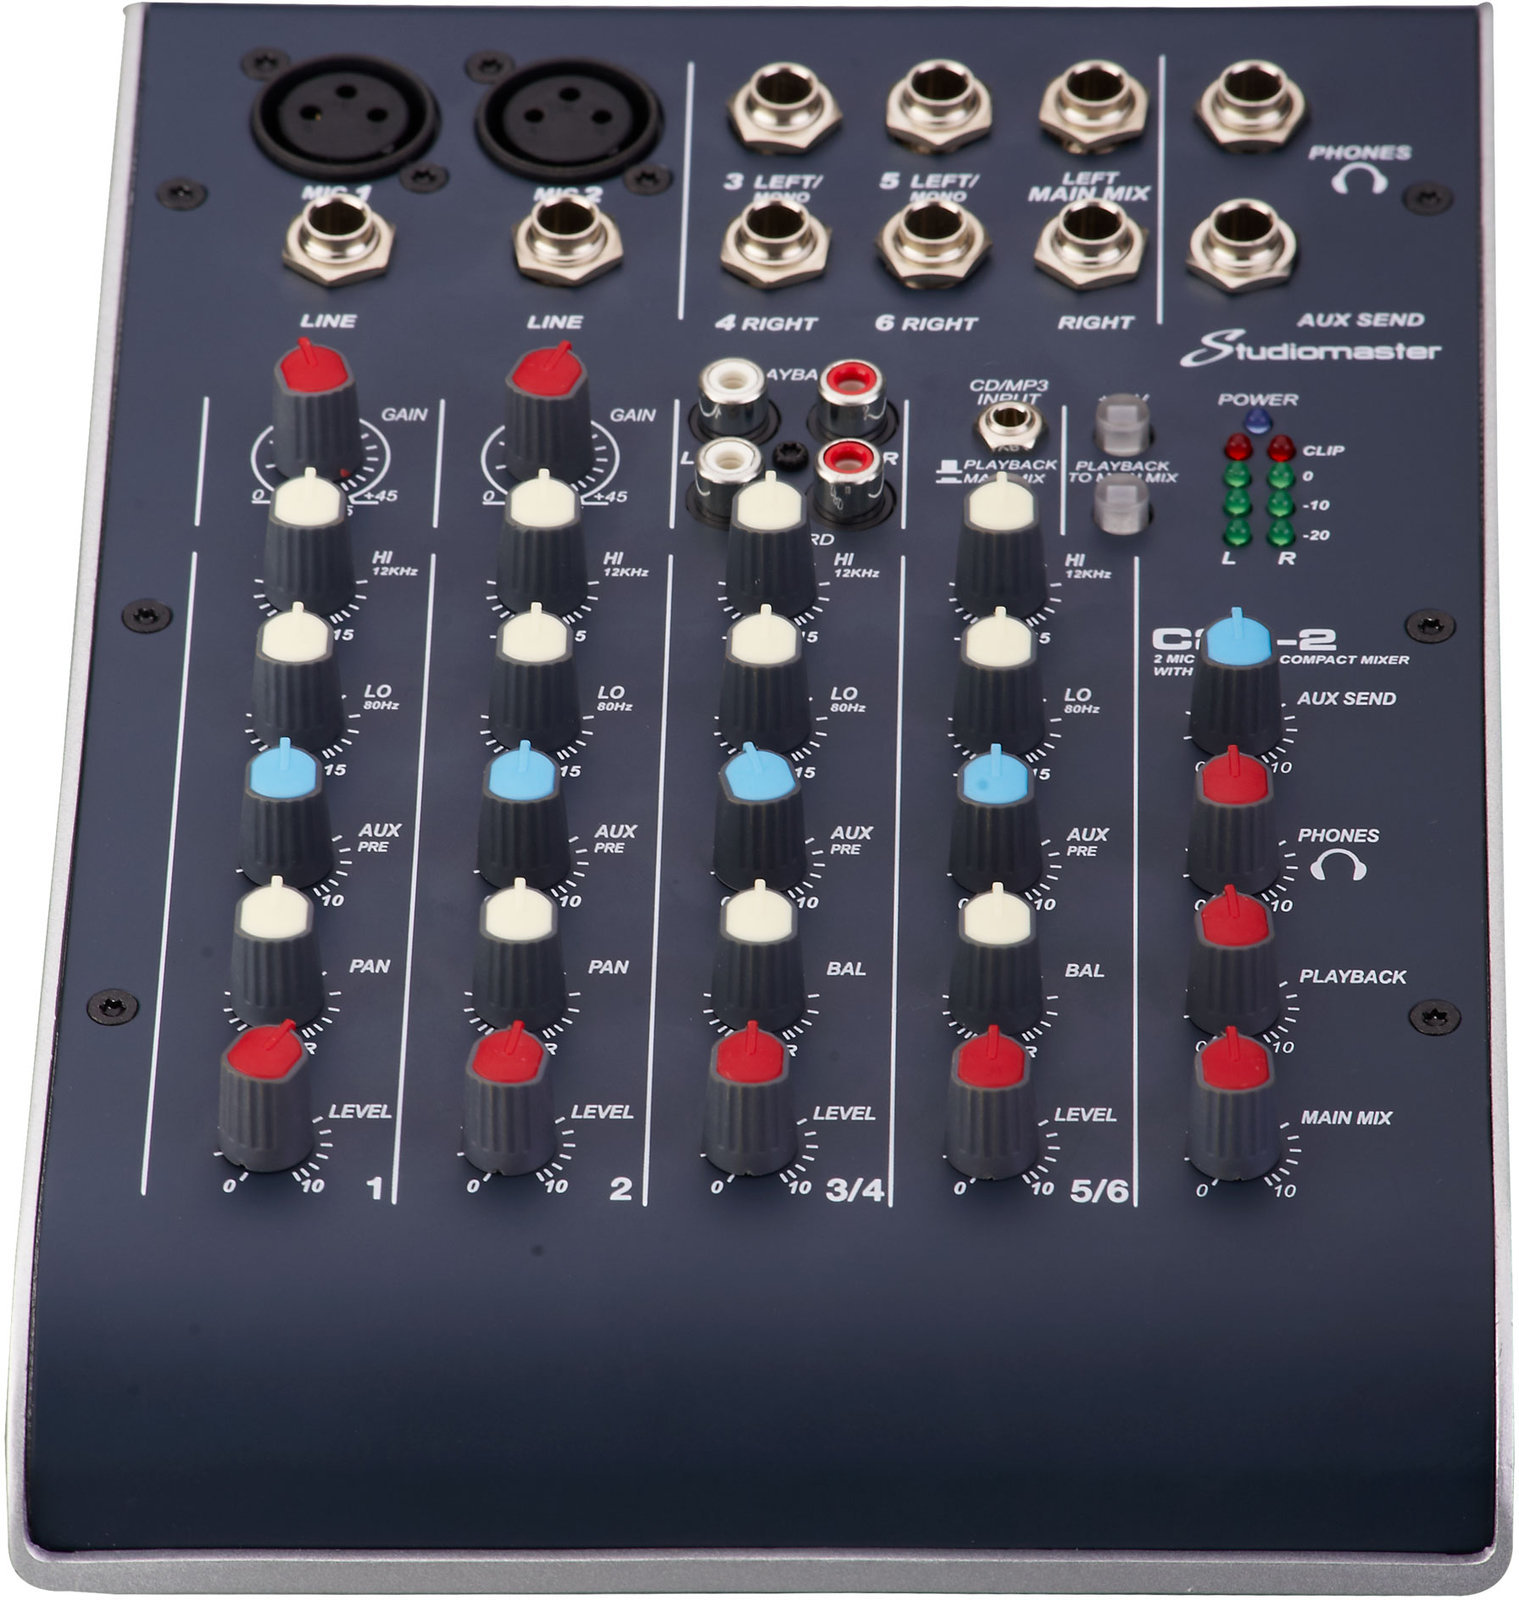 Table de mixage analogique Studiomaster C2-2